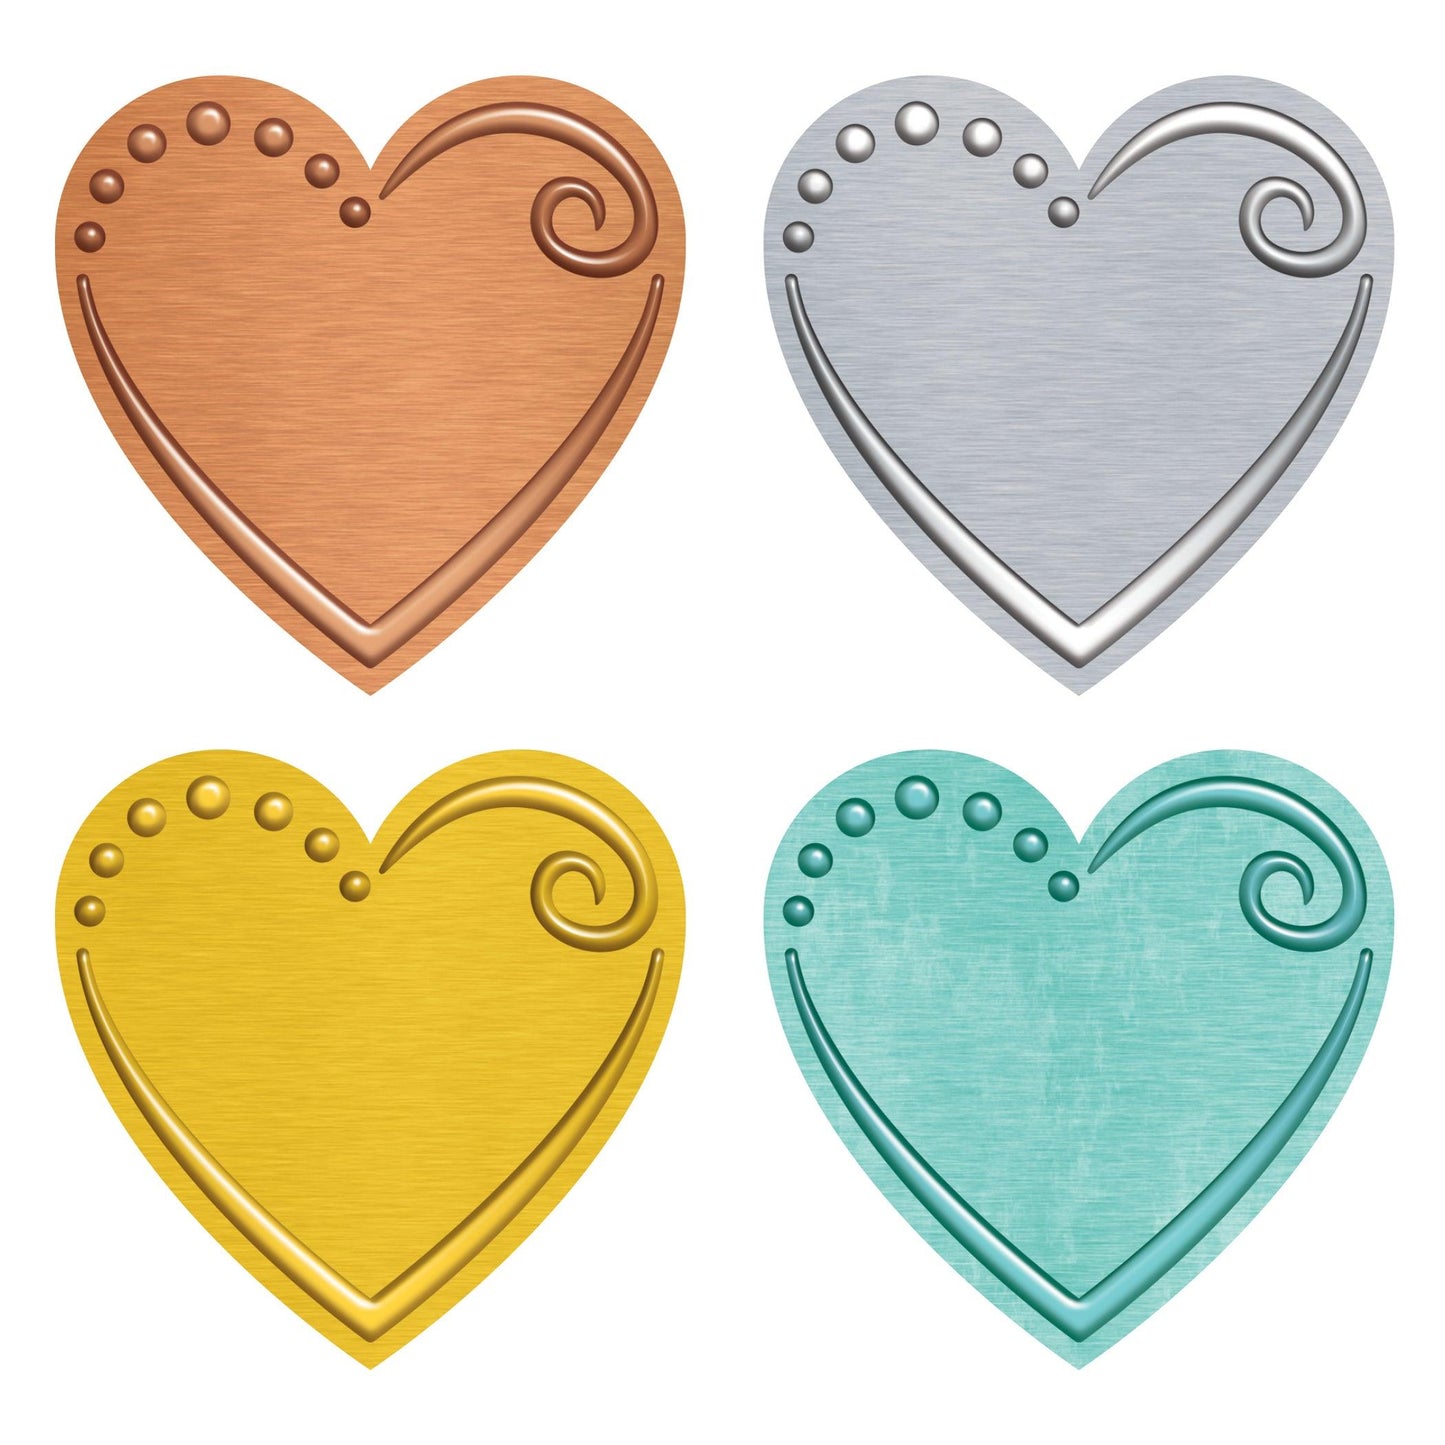 I ♥ Metal™ Hearts Mini Accents Variety Pack, 36 Per Pack, 6 Packs - Loomini